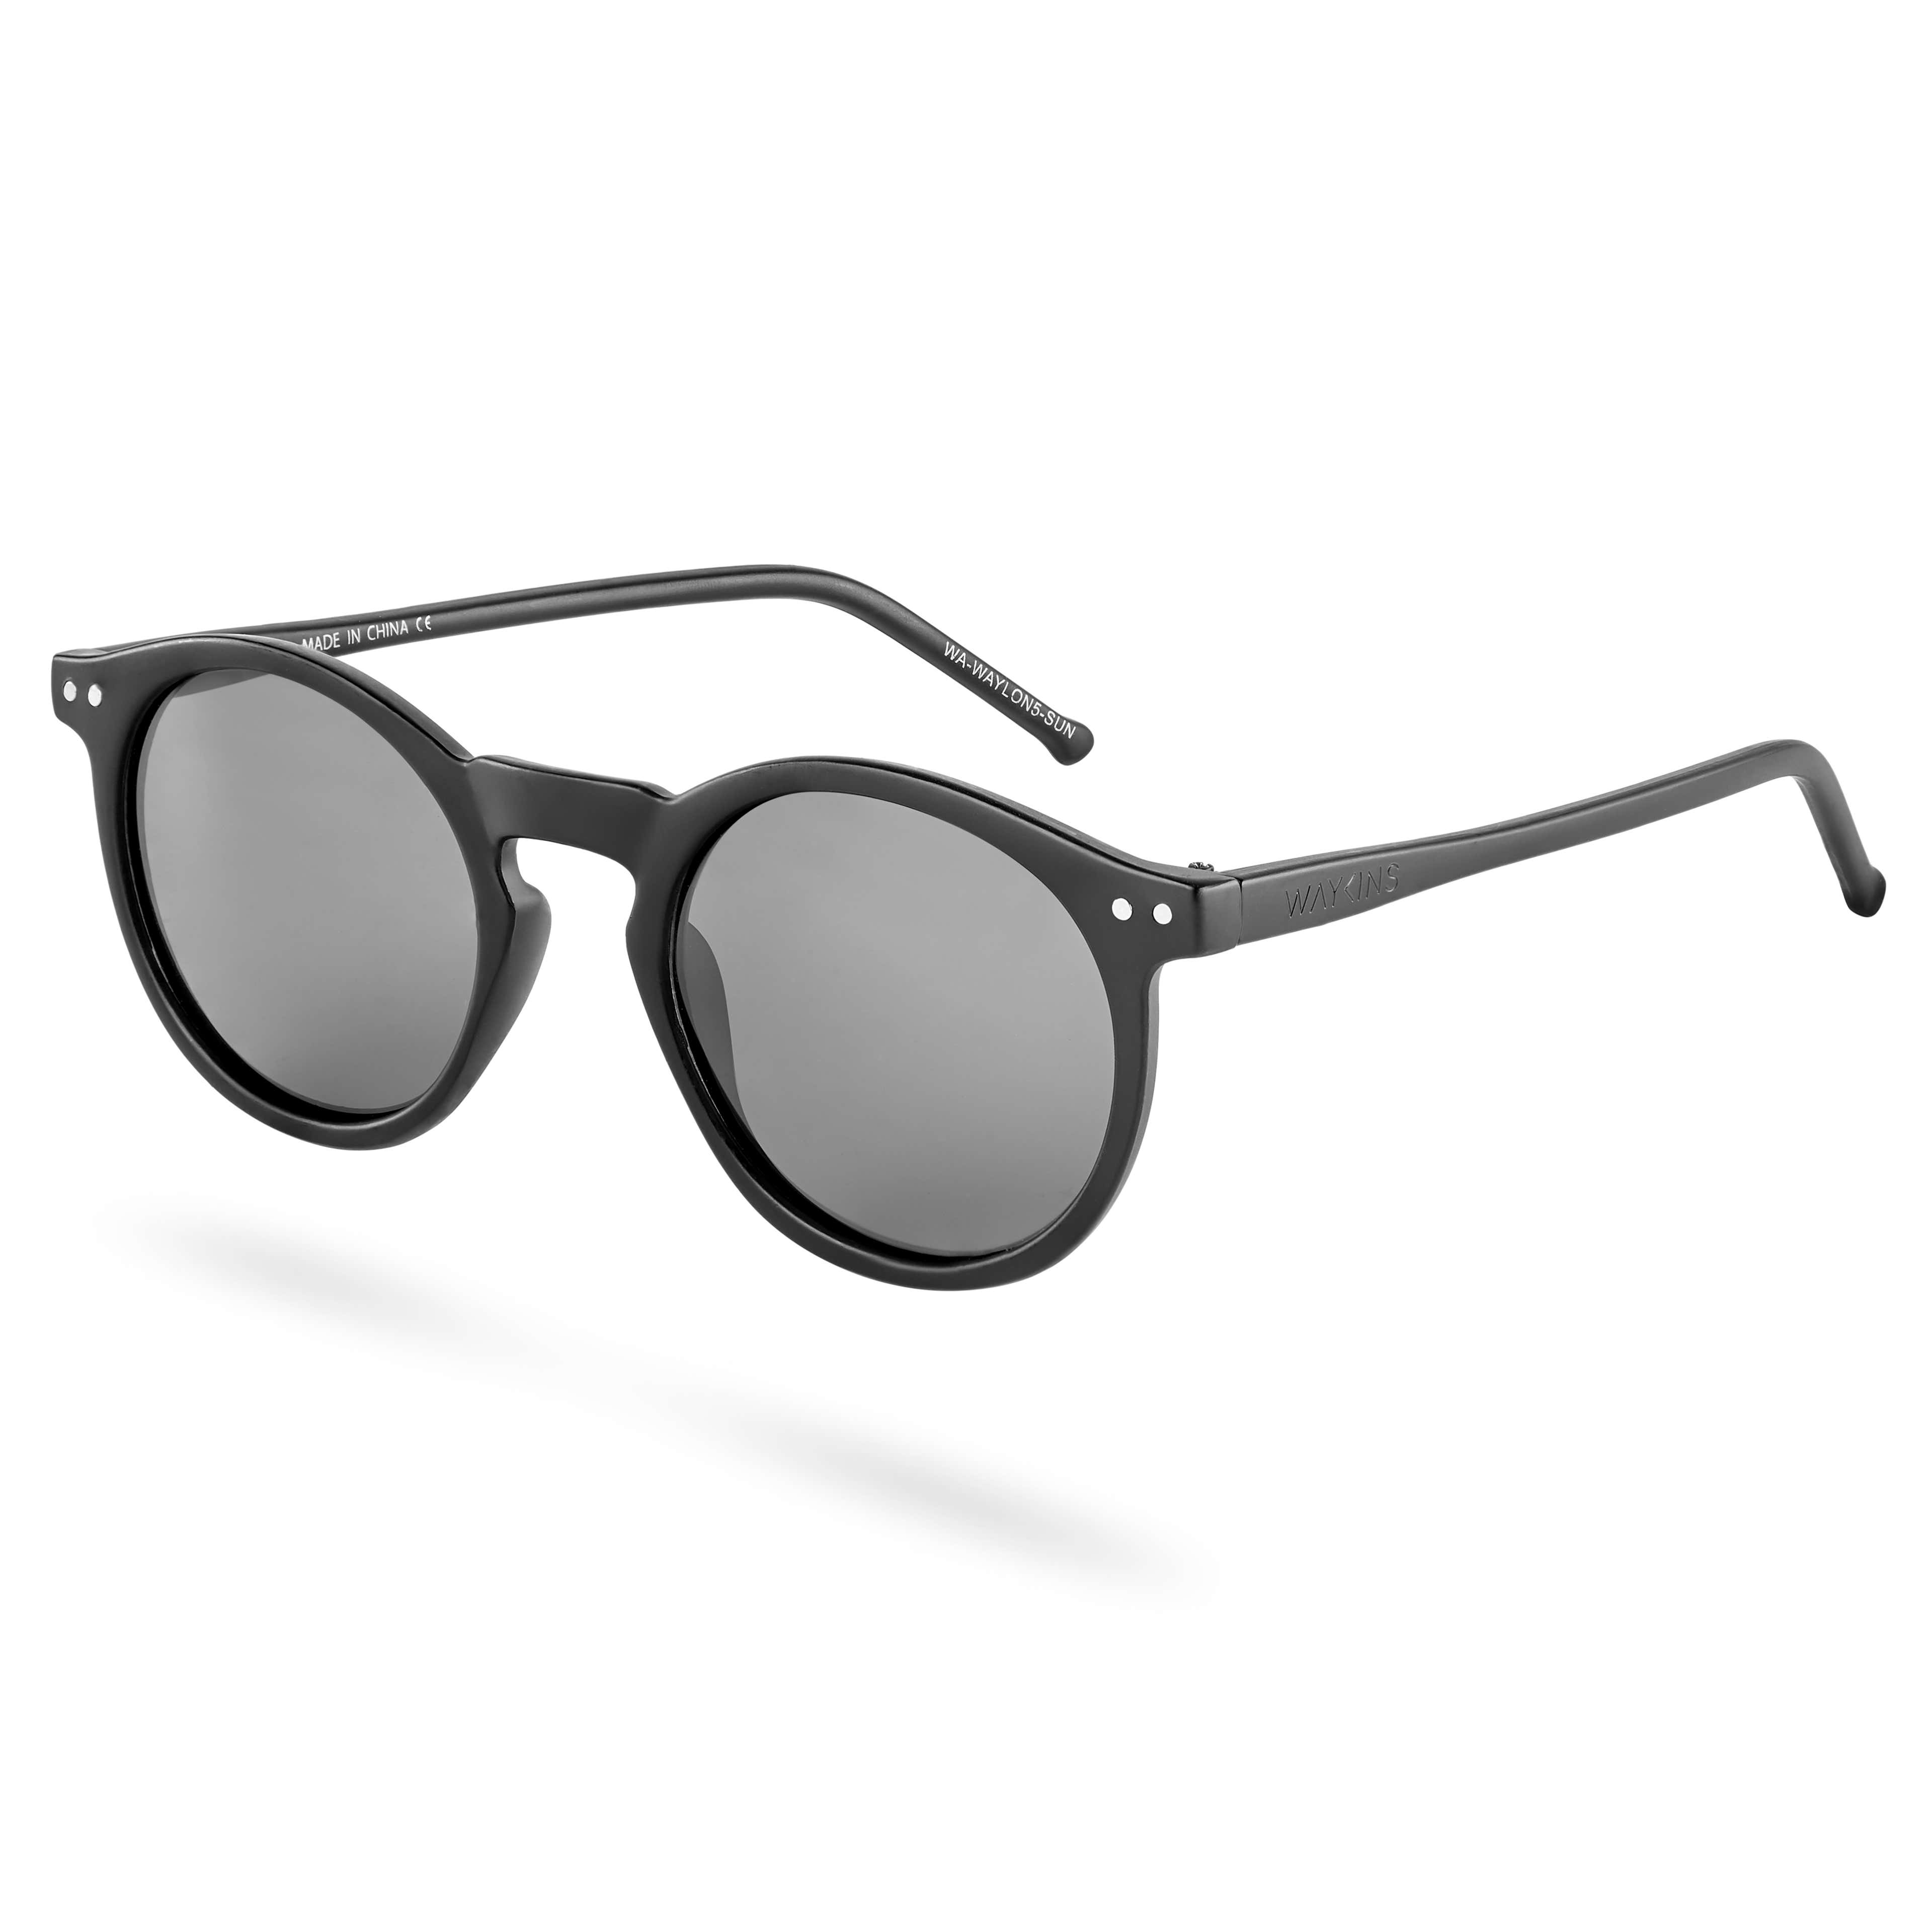 Waylon Black Vista Sunglasses